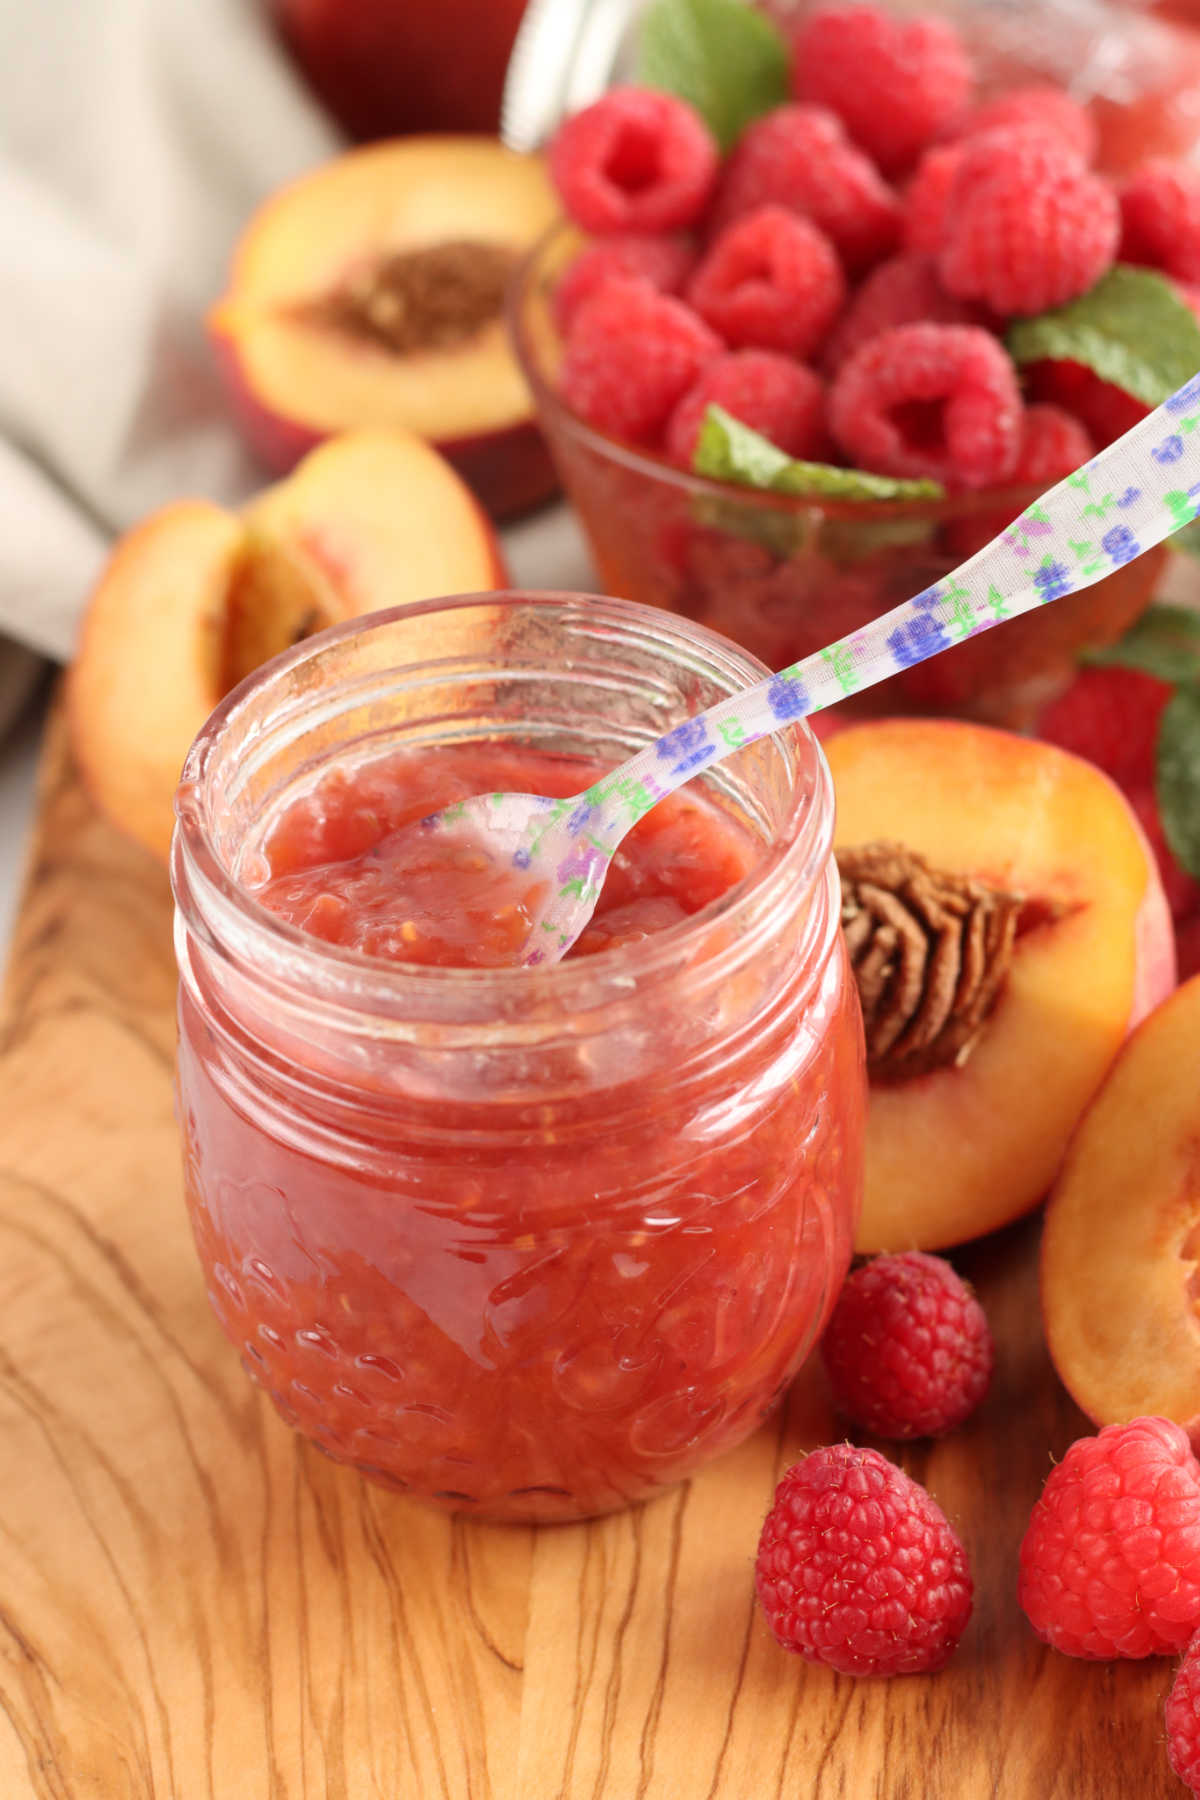 Clear jar of peach raspberry jam on wooden cutting board, floral spoon in jar, berries around.